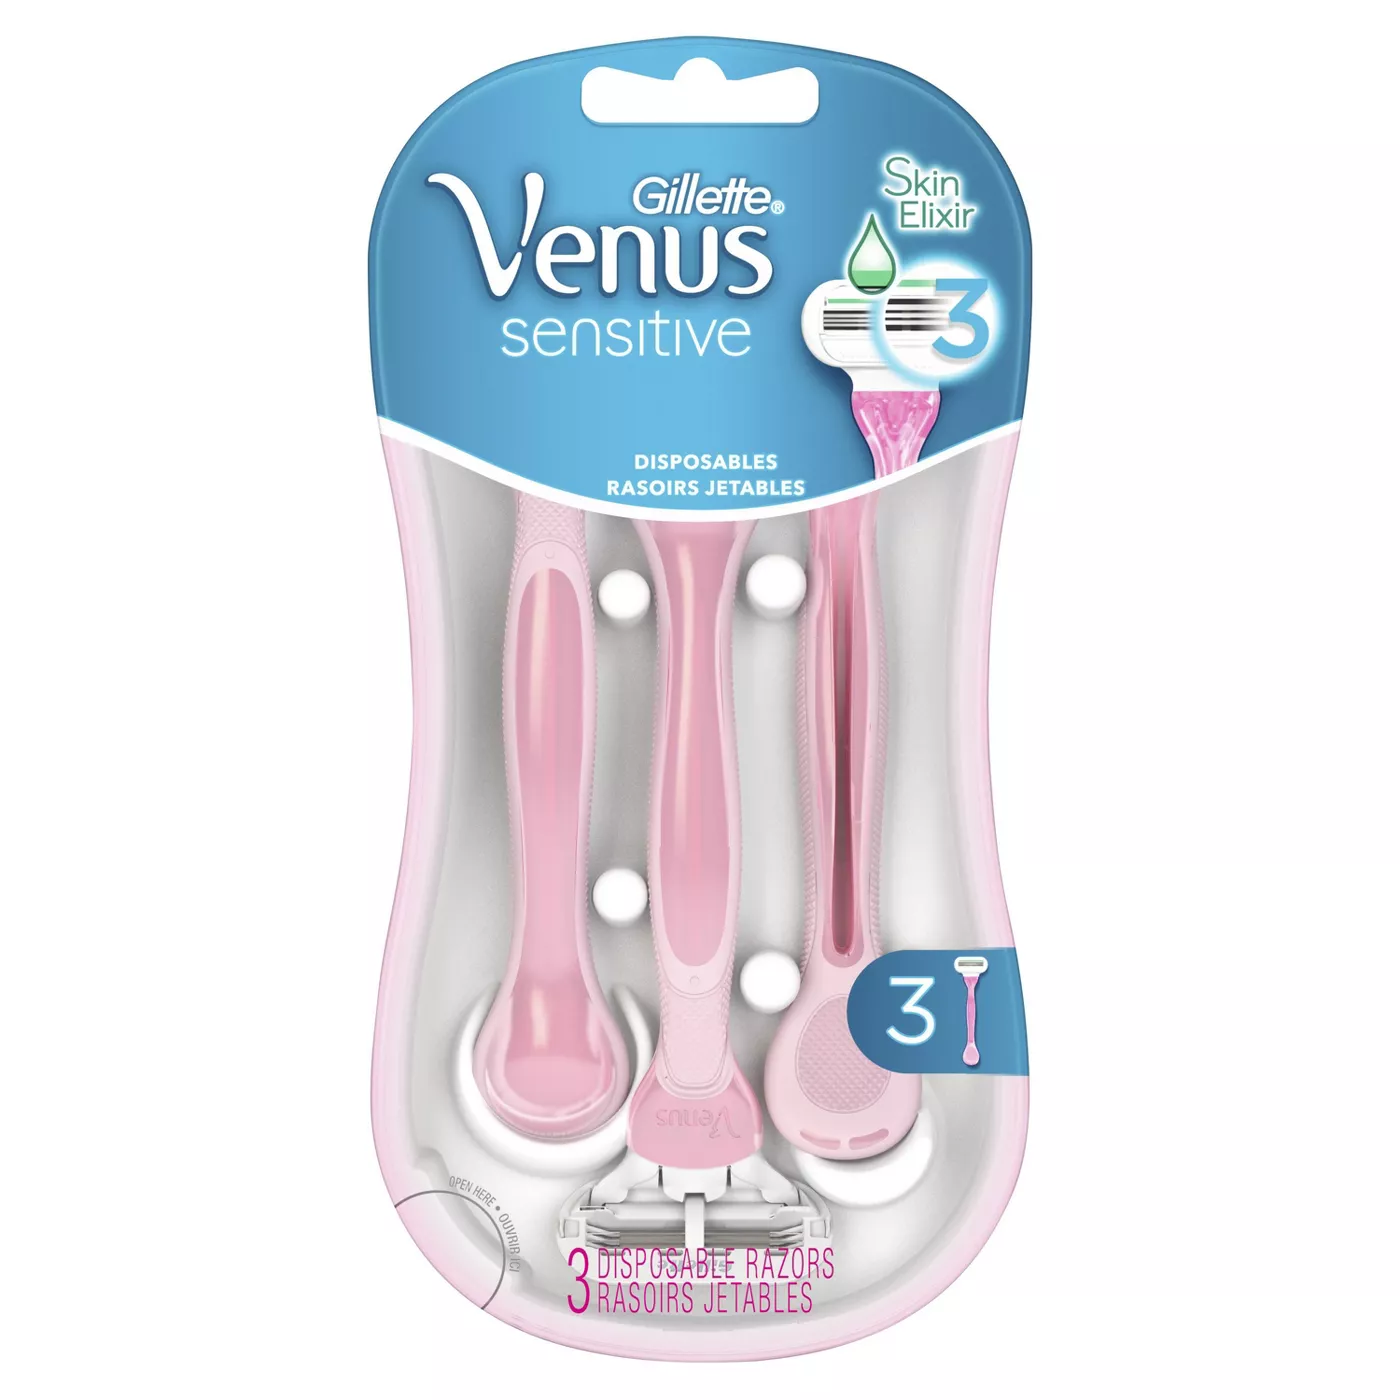 Venus Sensitive 3-Blade Women's Disposable Razors - image 1 of 7